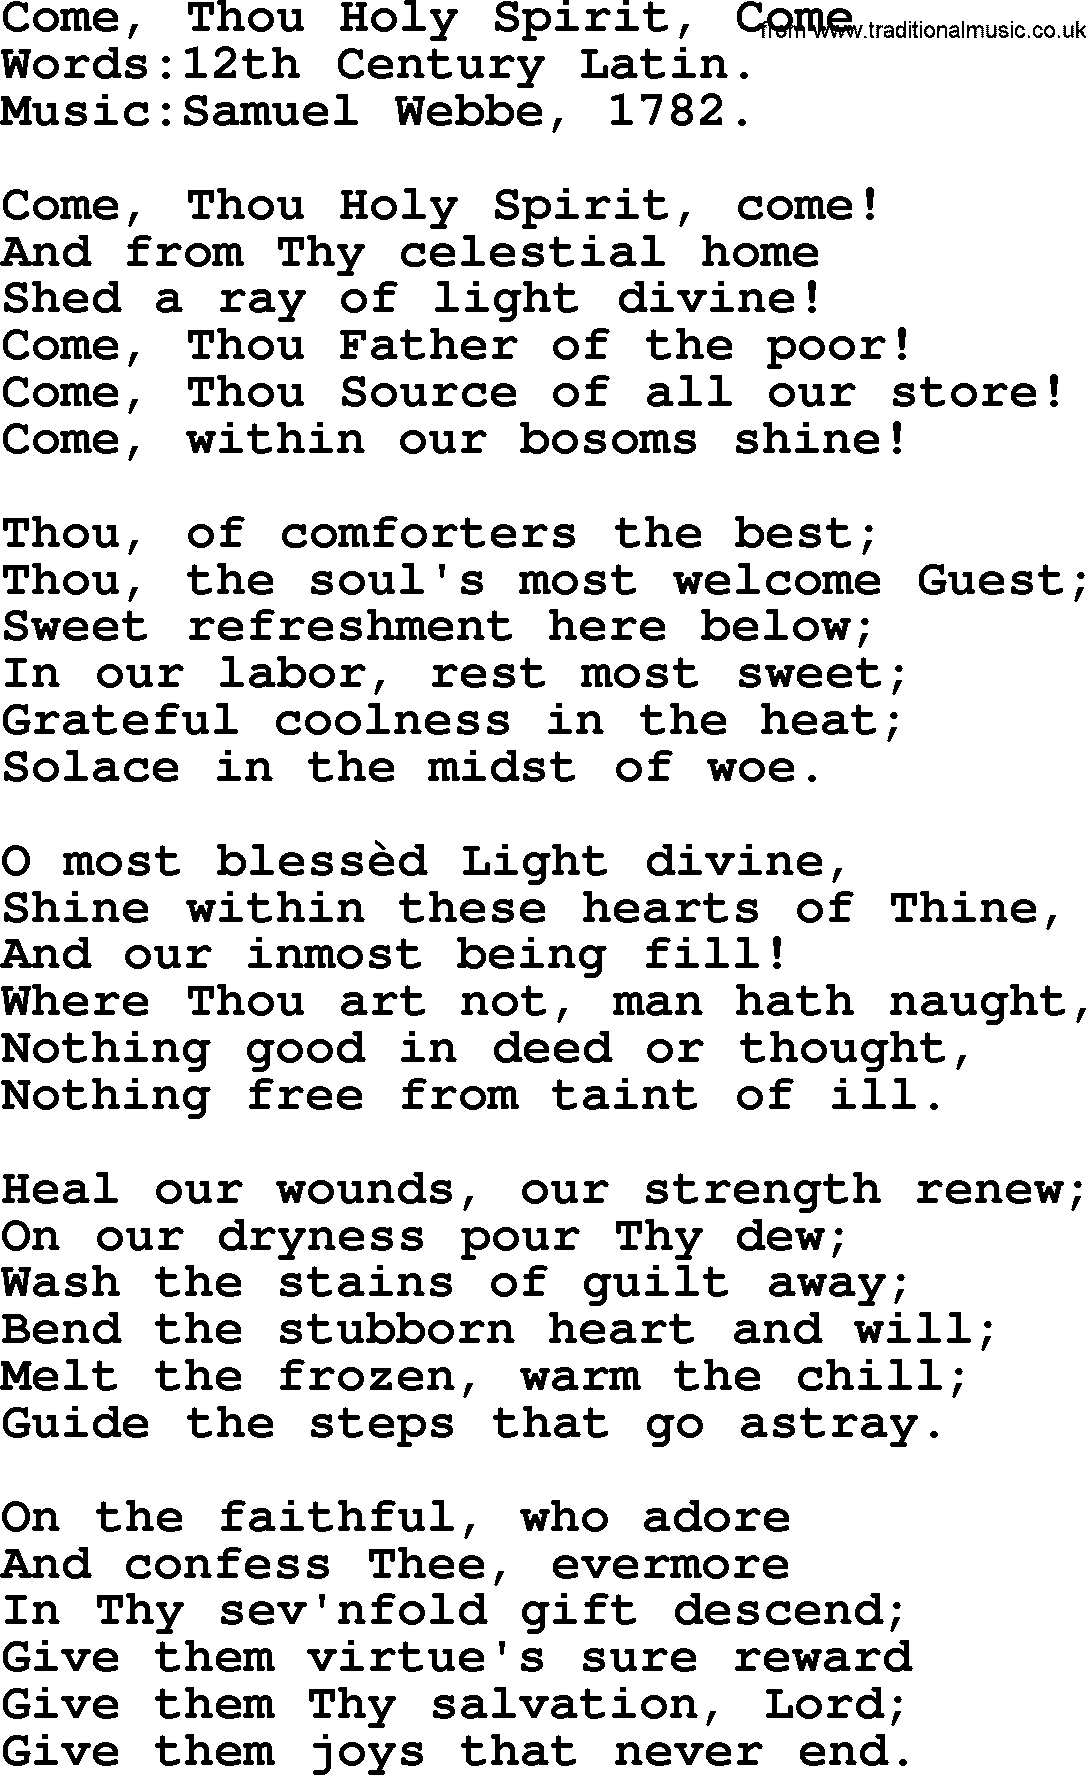 Pentacost Hymns, Hymn: Come, Thou Holy Spirit, Come, lyrics with PDF